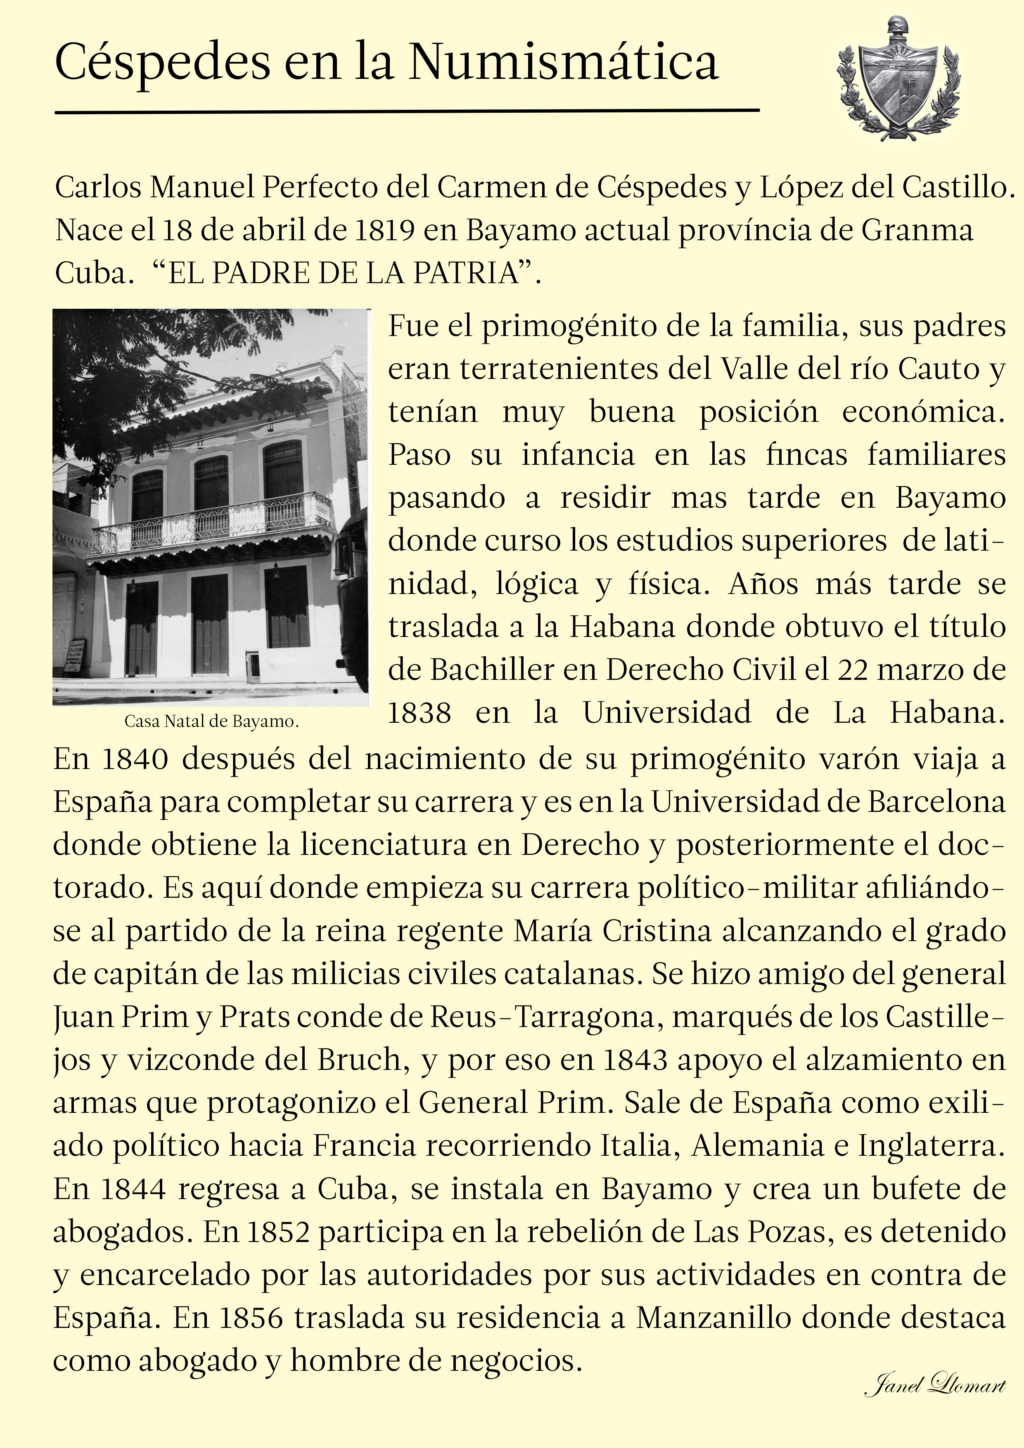 Carlos Manuel de Cespedes en la numismatica Cubana 213